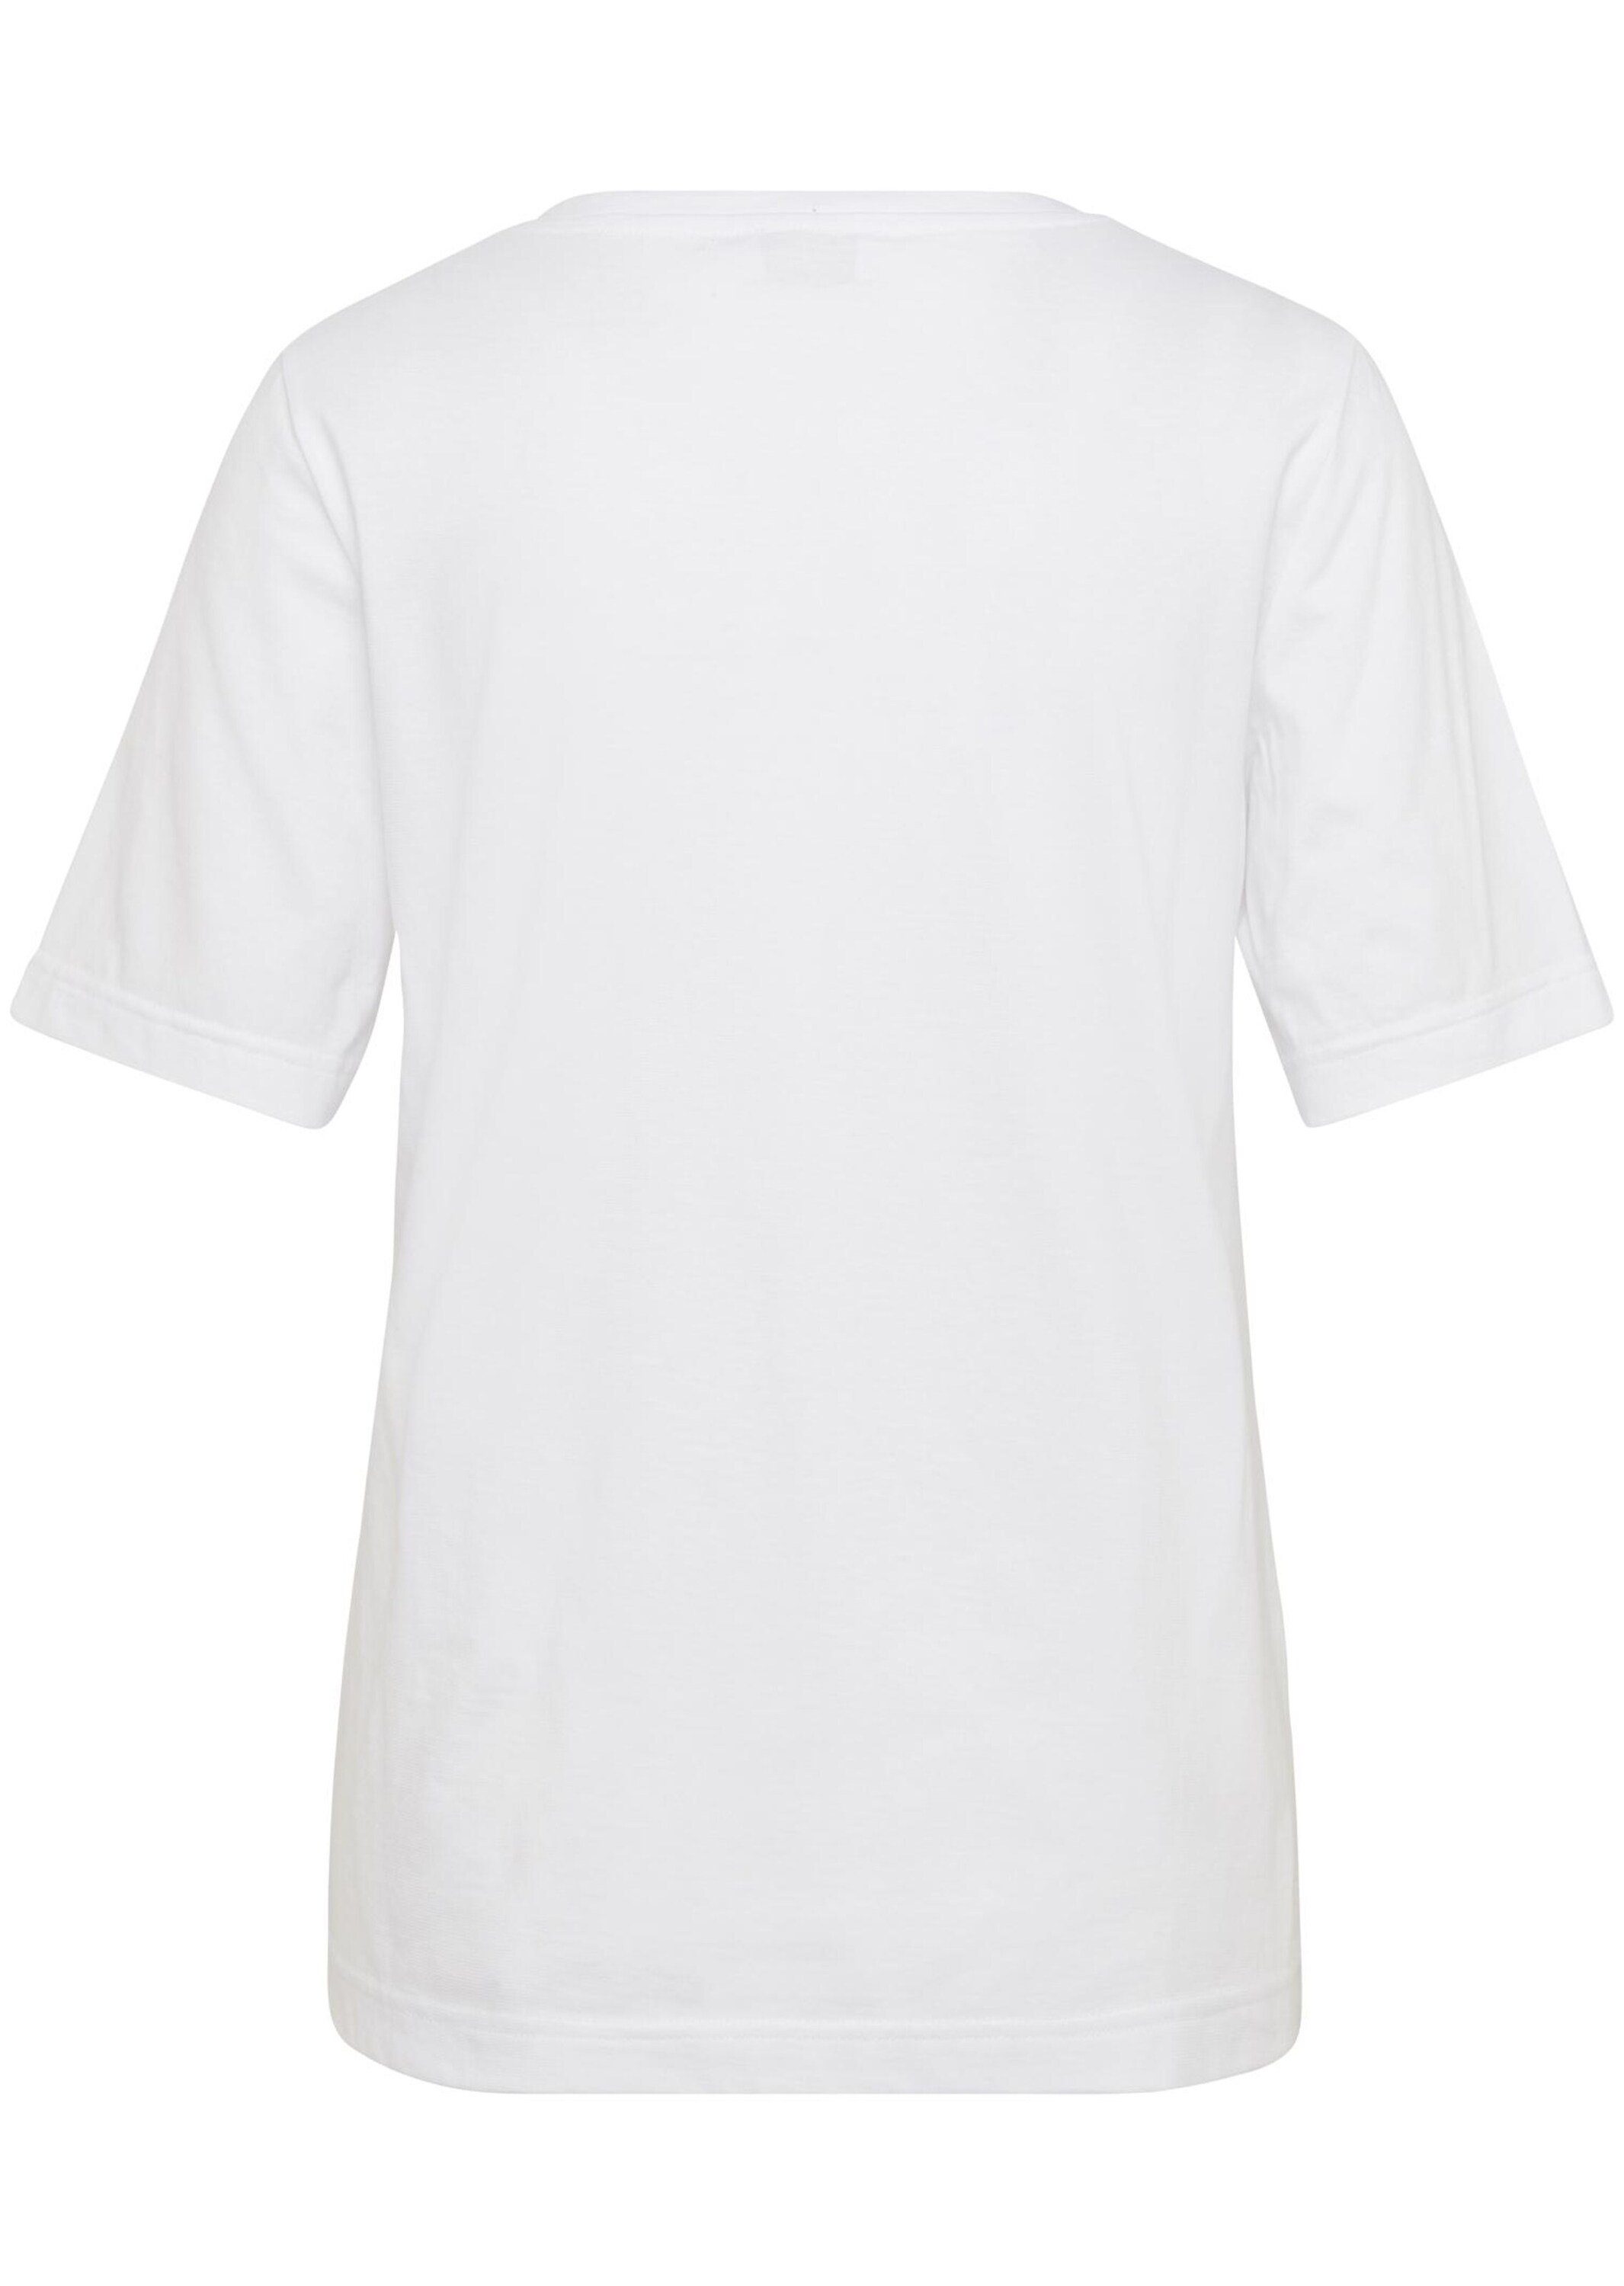 GOLDNER Print-Shirt Kurzgröße: weiß | T-Shirts